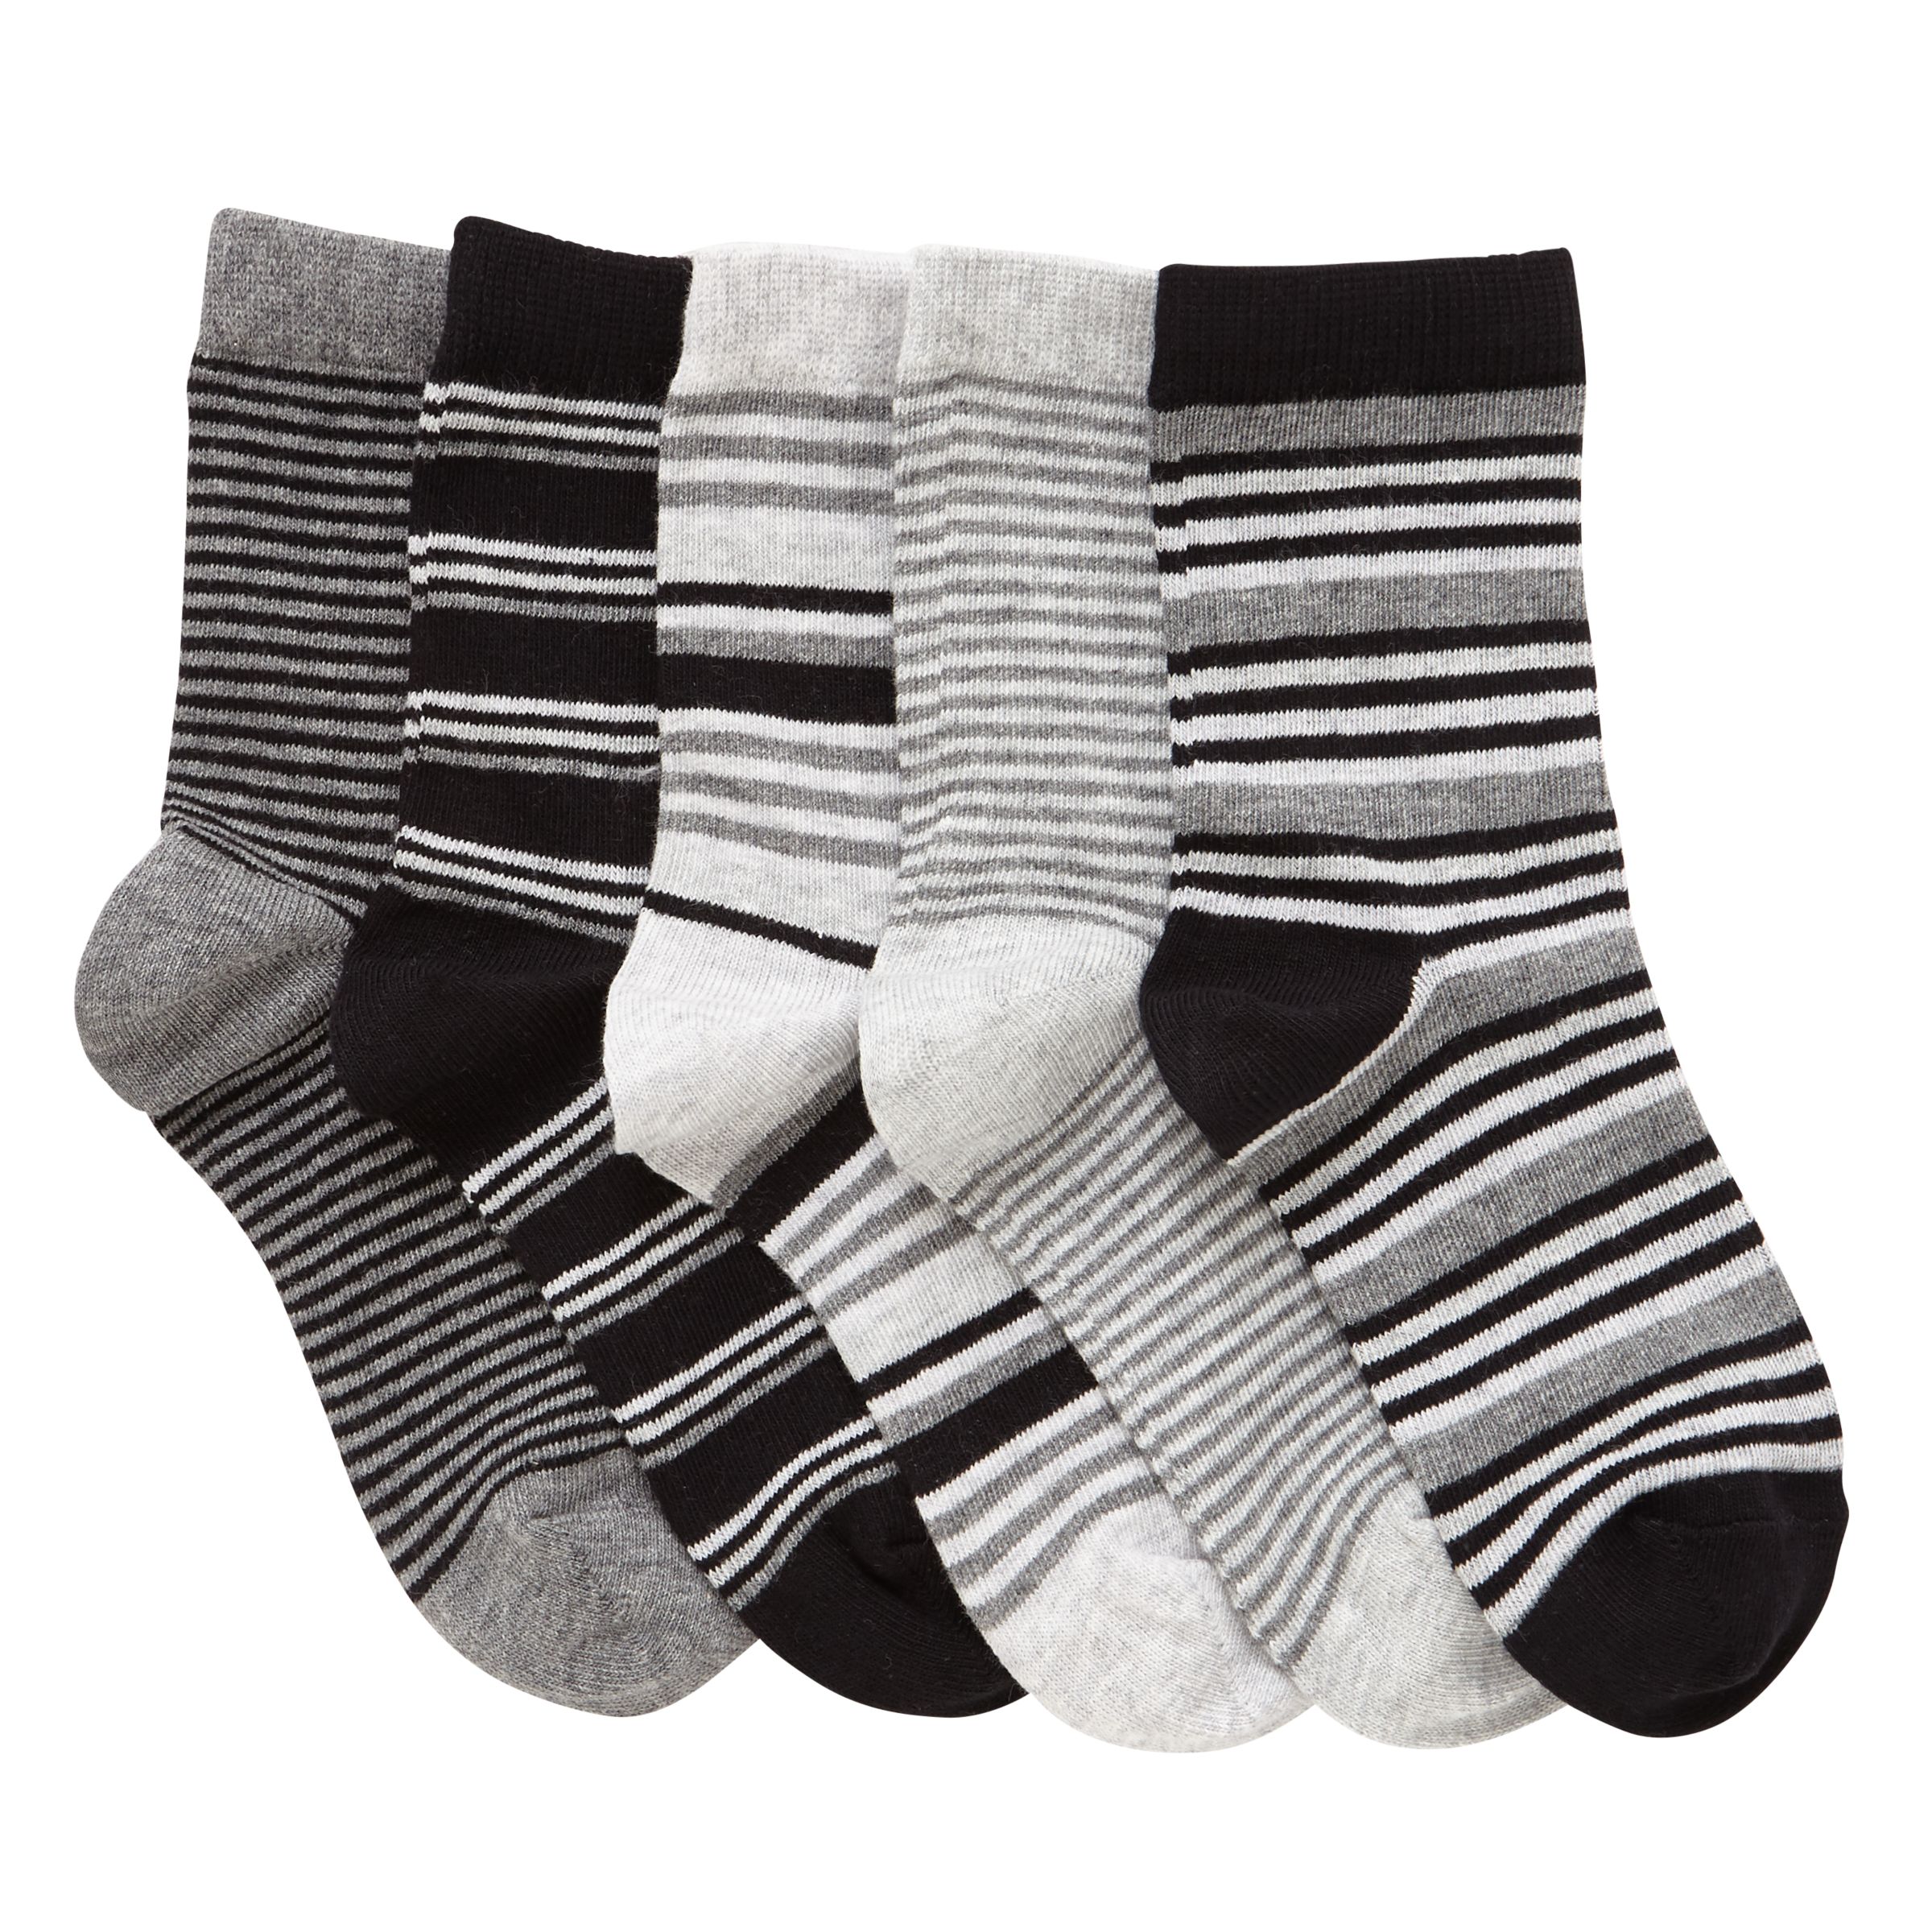 John Lewis Kids' Stripe Socks, Pack of 5, Black